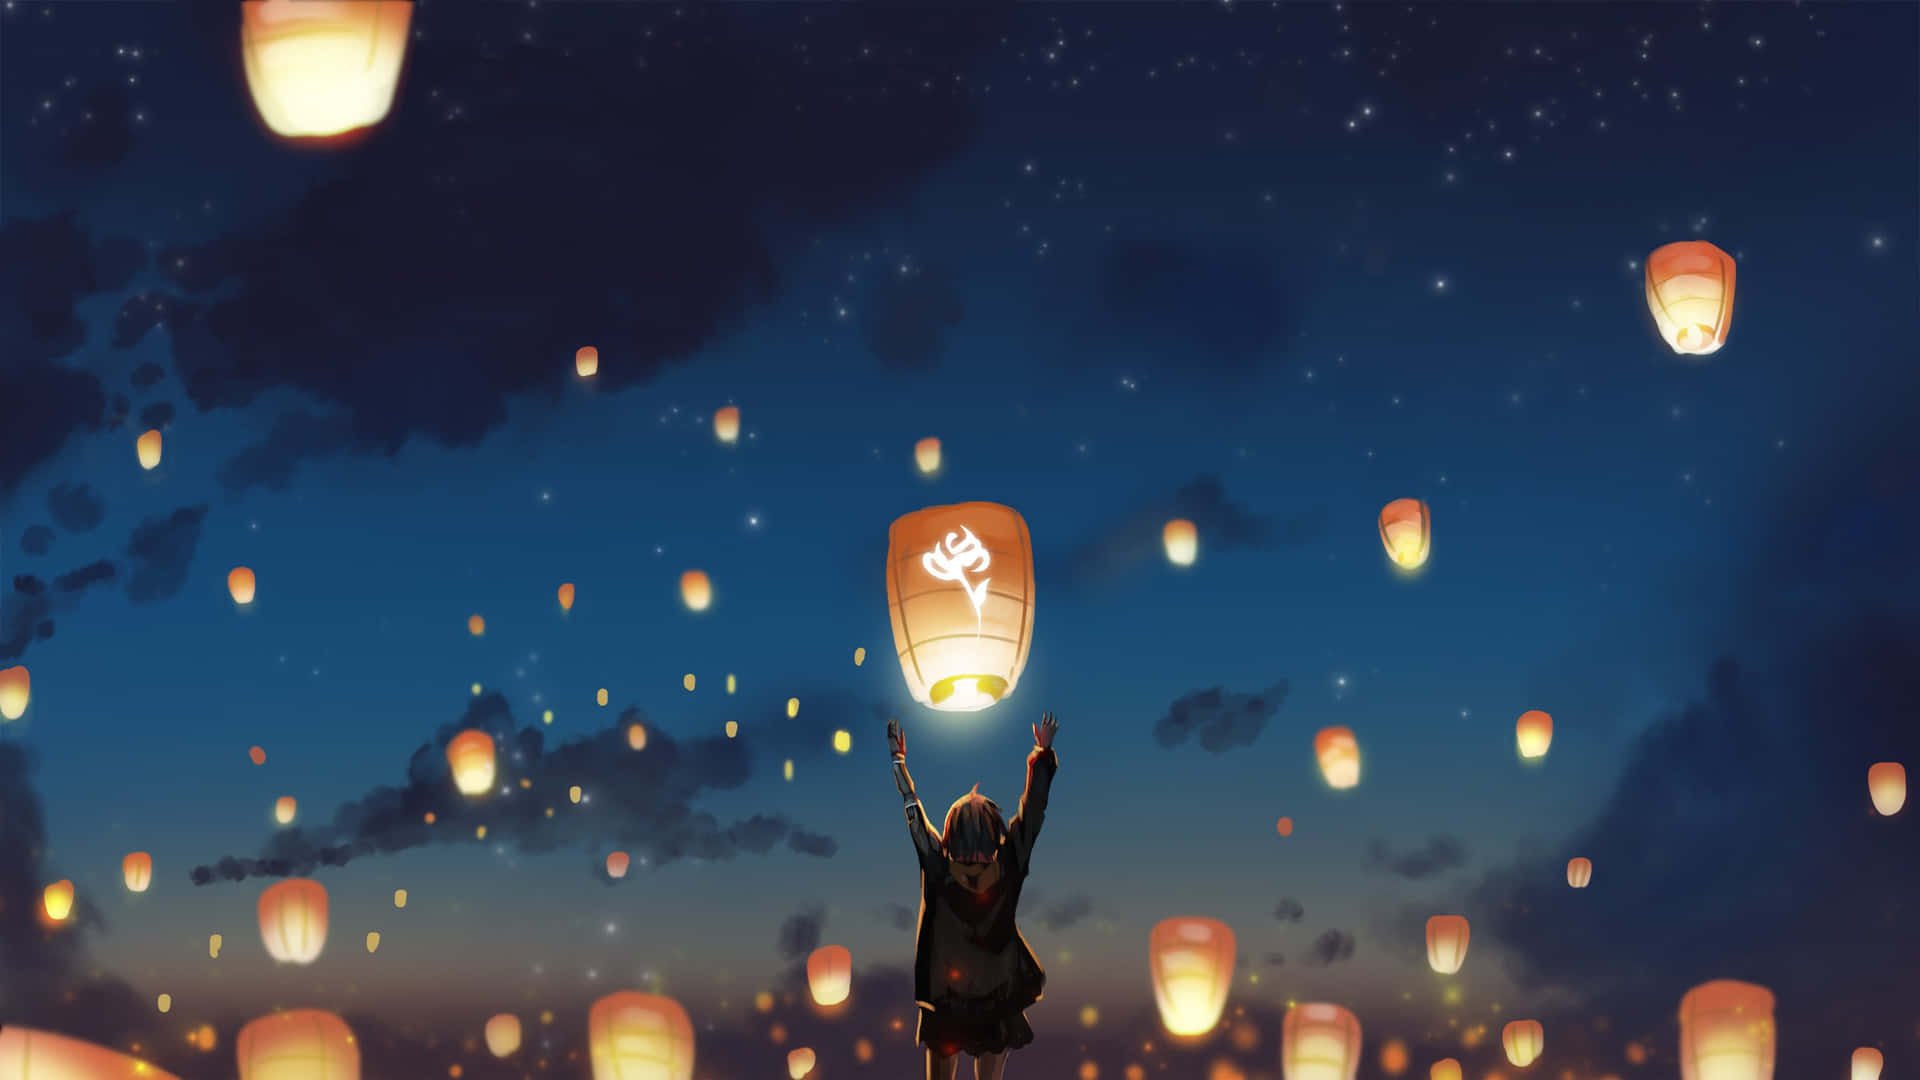 Anime Lantern Night Scenery Background